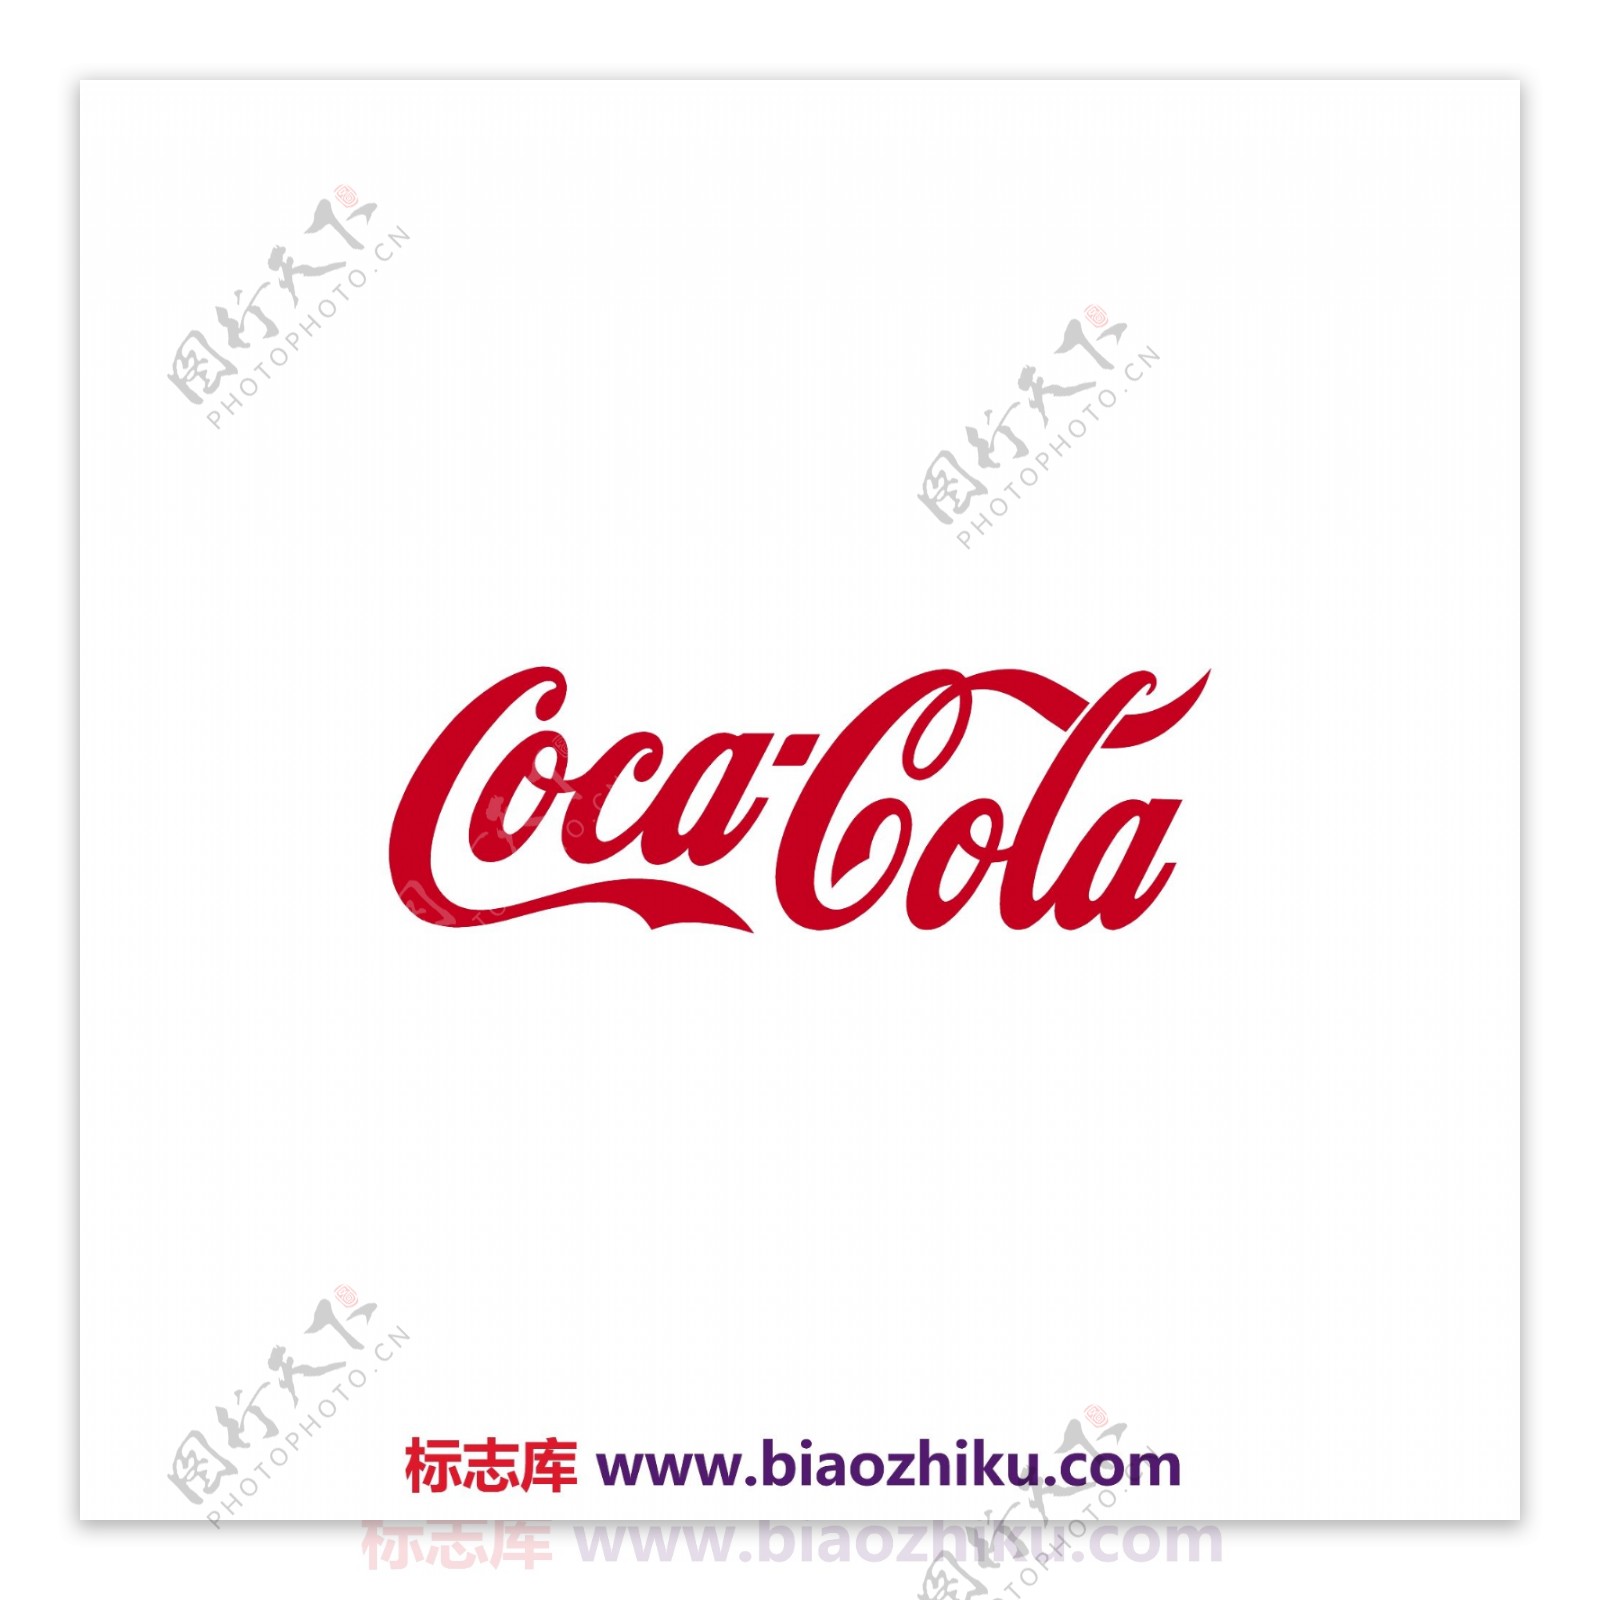 CocaCola2logo设计欣赏可口可乐2标志设计欣赏